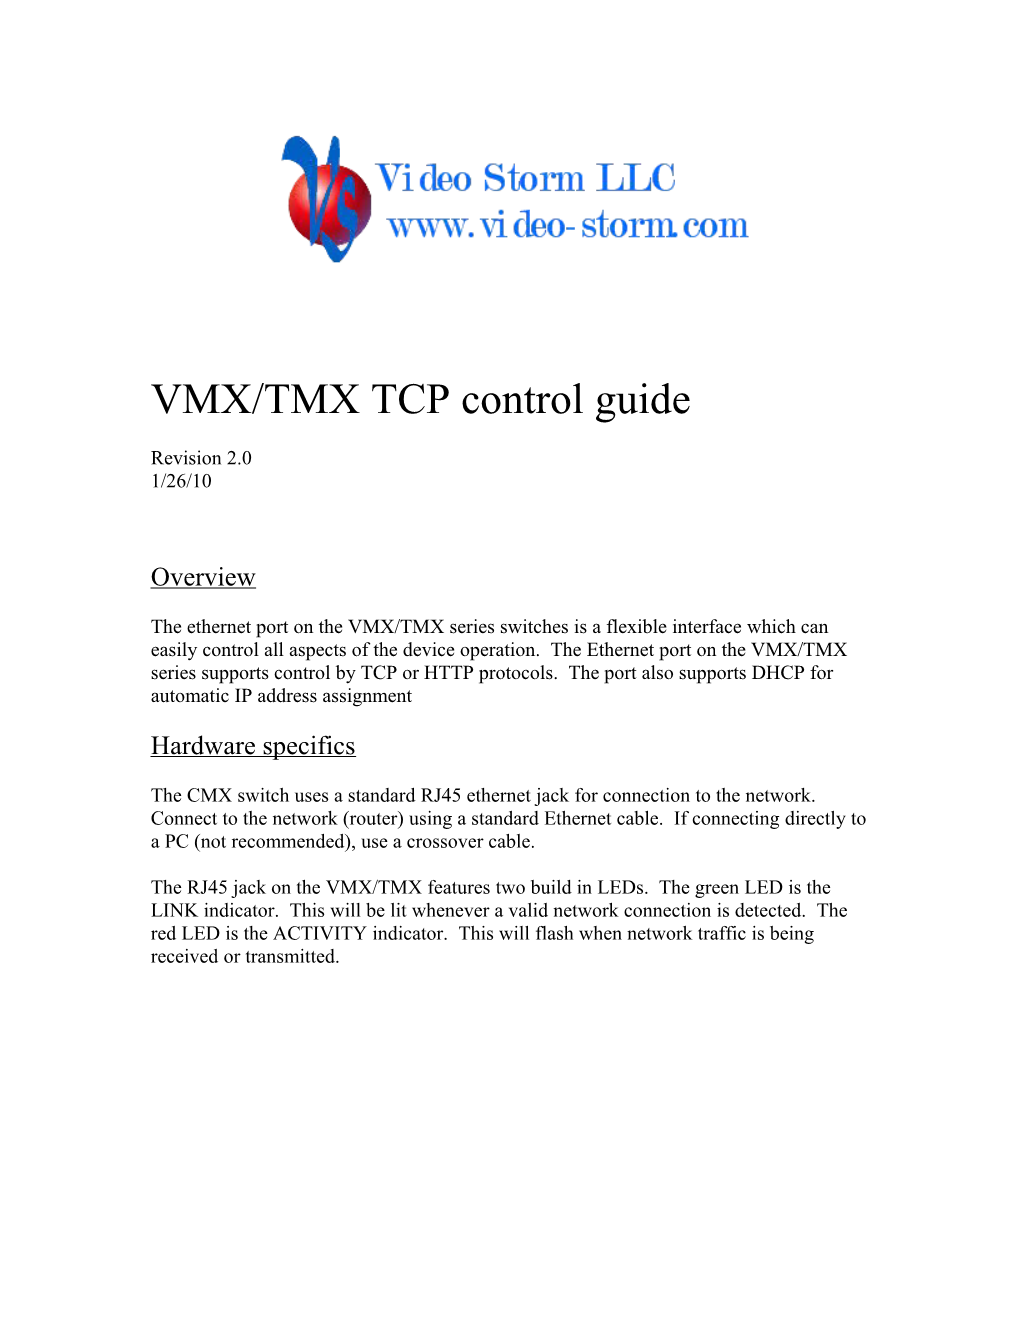 VMX/TMX TCP Control Guide